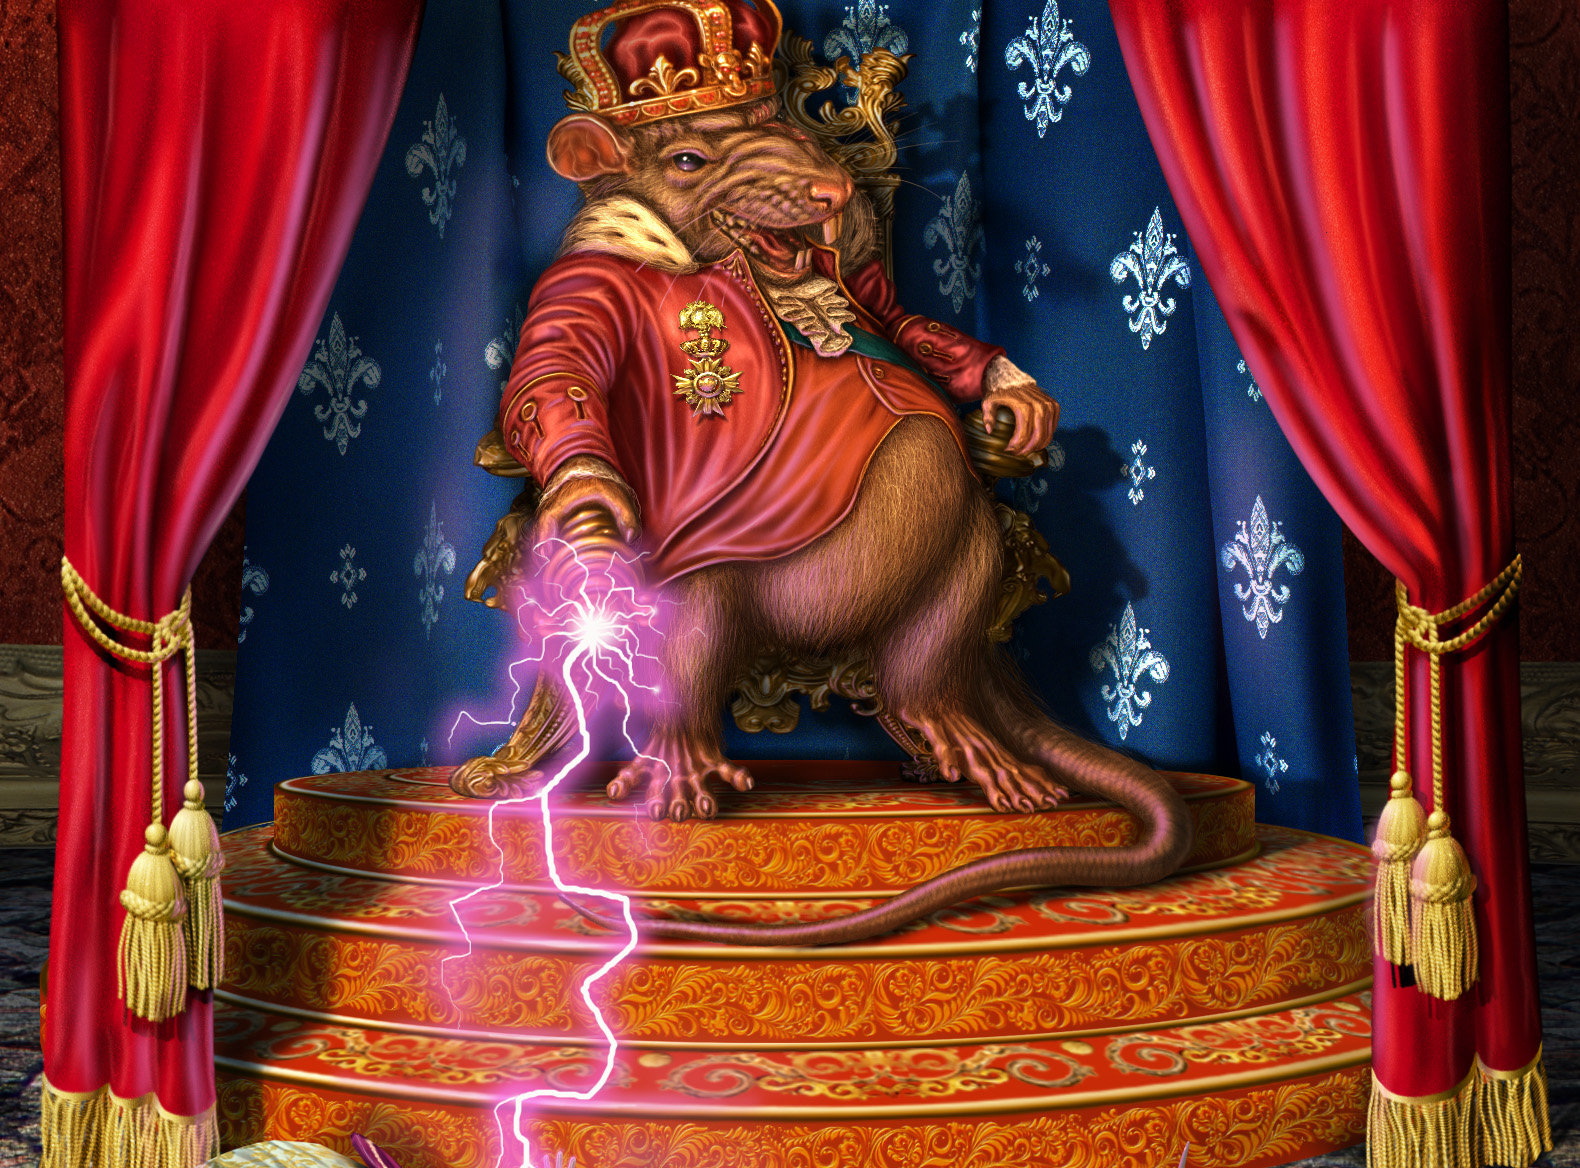 Картинки крысиного короля. Мышиный Король. Щелкунчик и крысиный Король. Крысиный Король Щелкунчик арт. Мышиный Король на троне Щелкунчик.